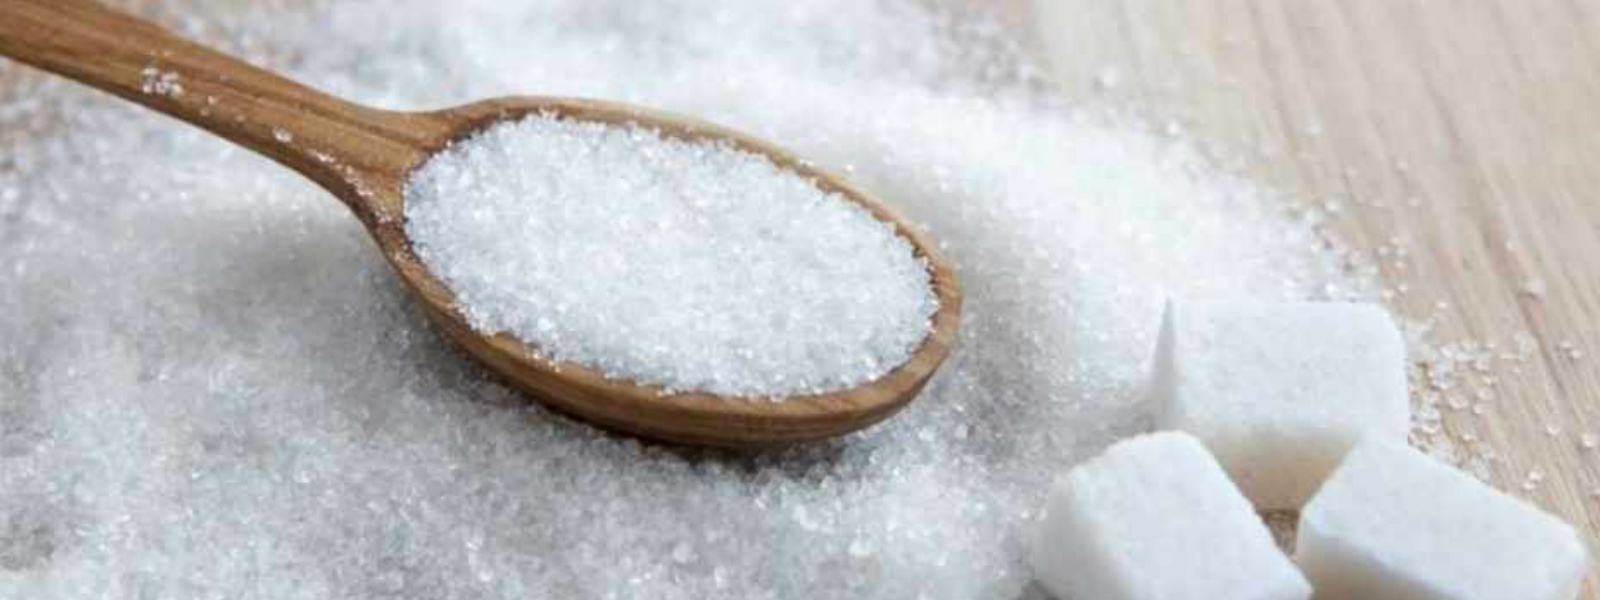 Is Sri Lanka facing a shortage of Sugar? 